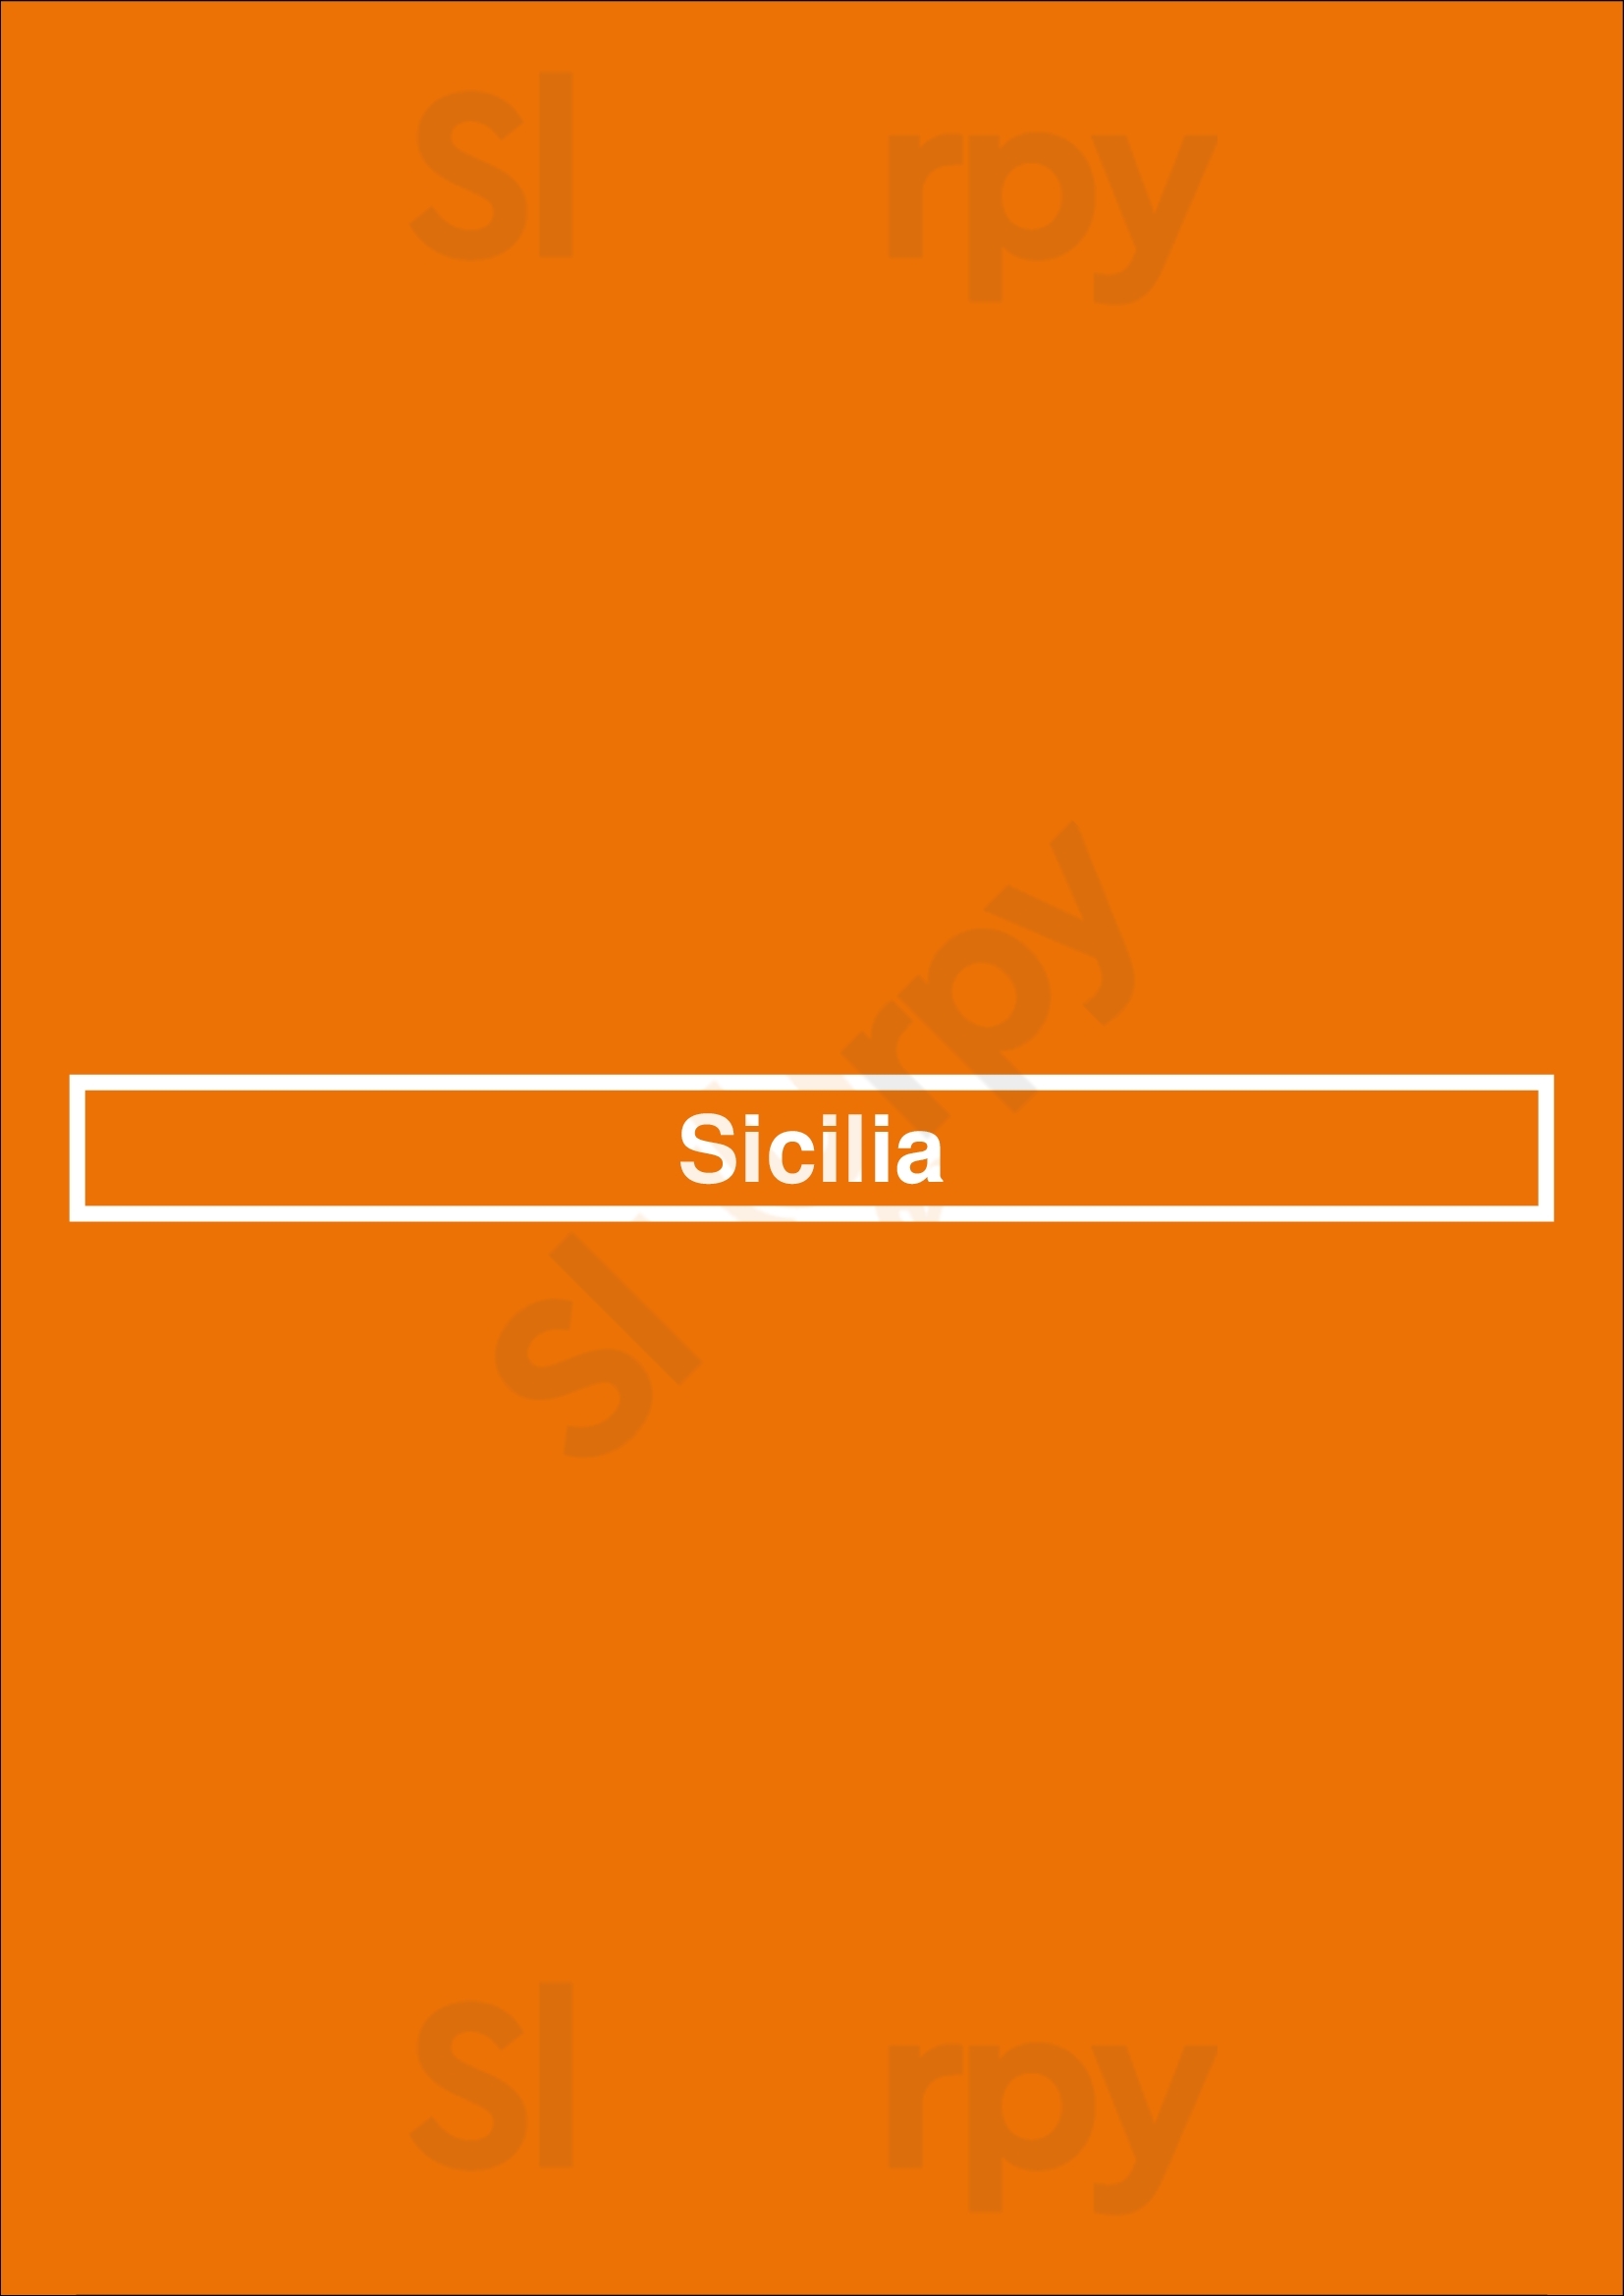 Sicilia Geldrop Menu - 1